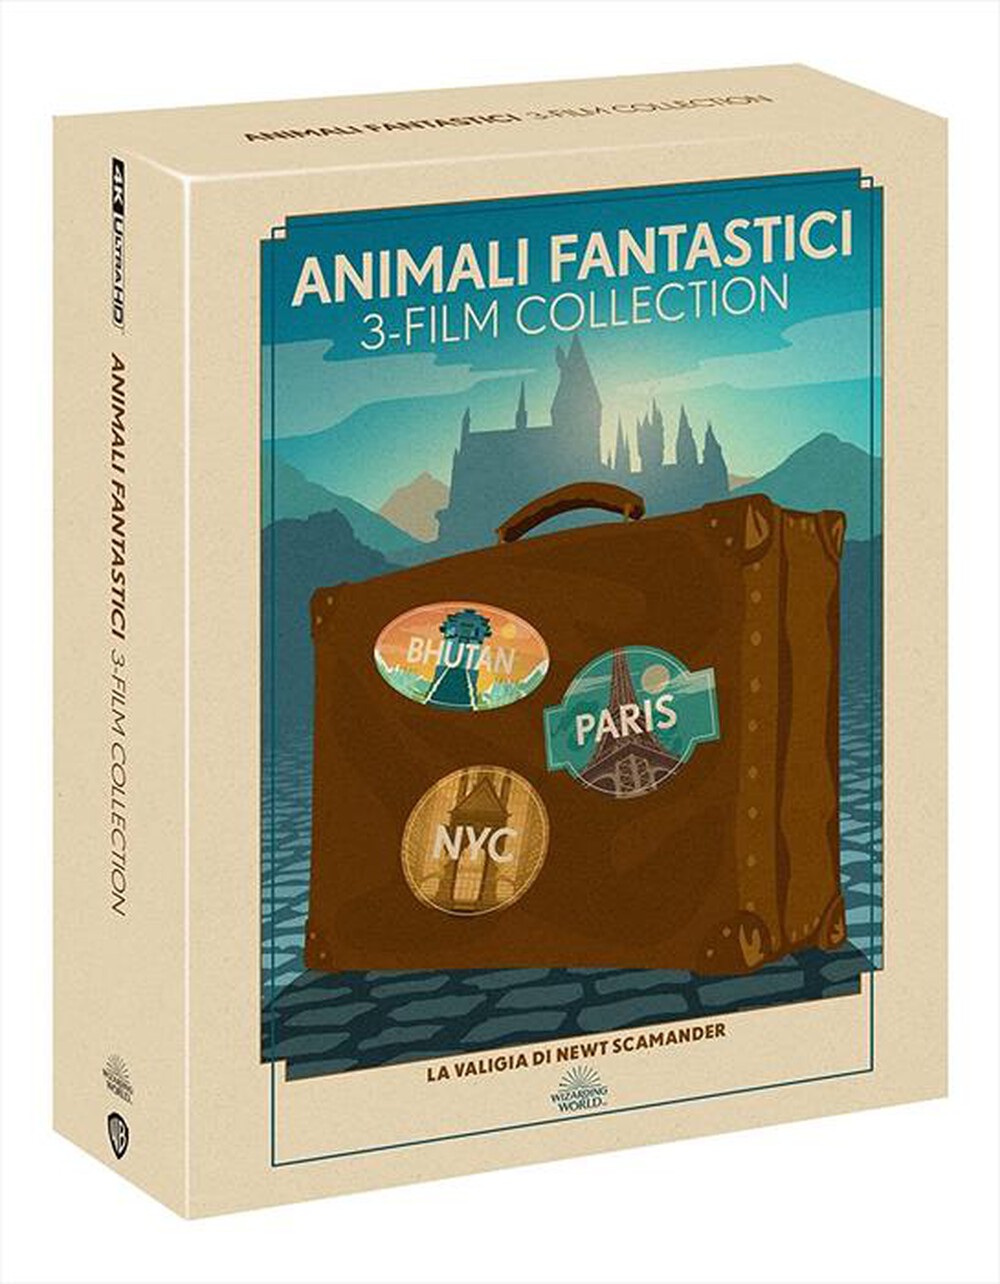 "WARNER HOME VIDEO - Animali Fantastici 3 Film Collection (Travel Art"